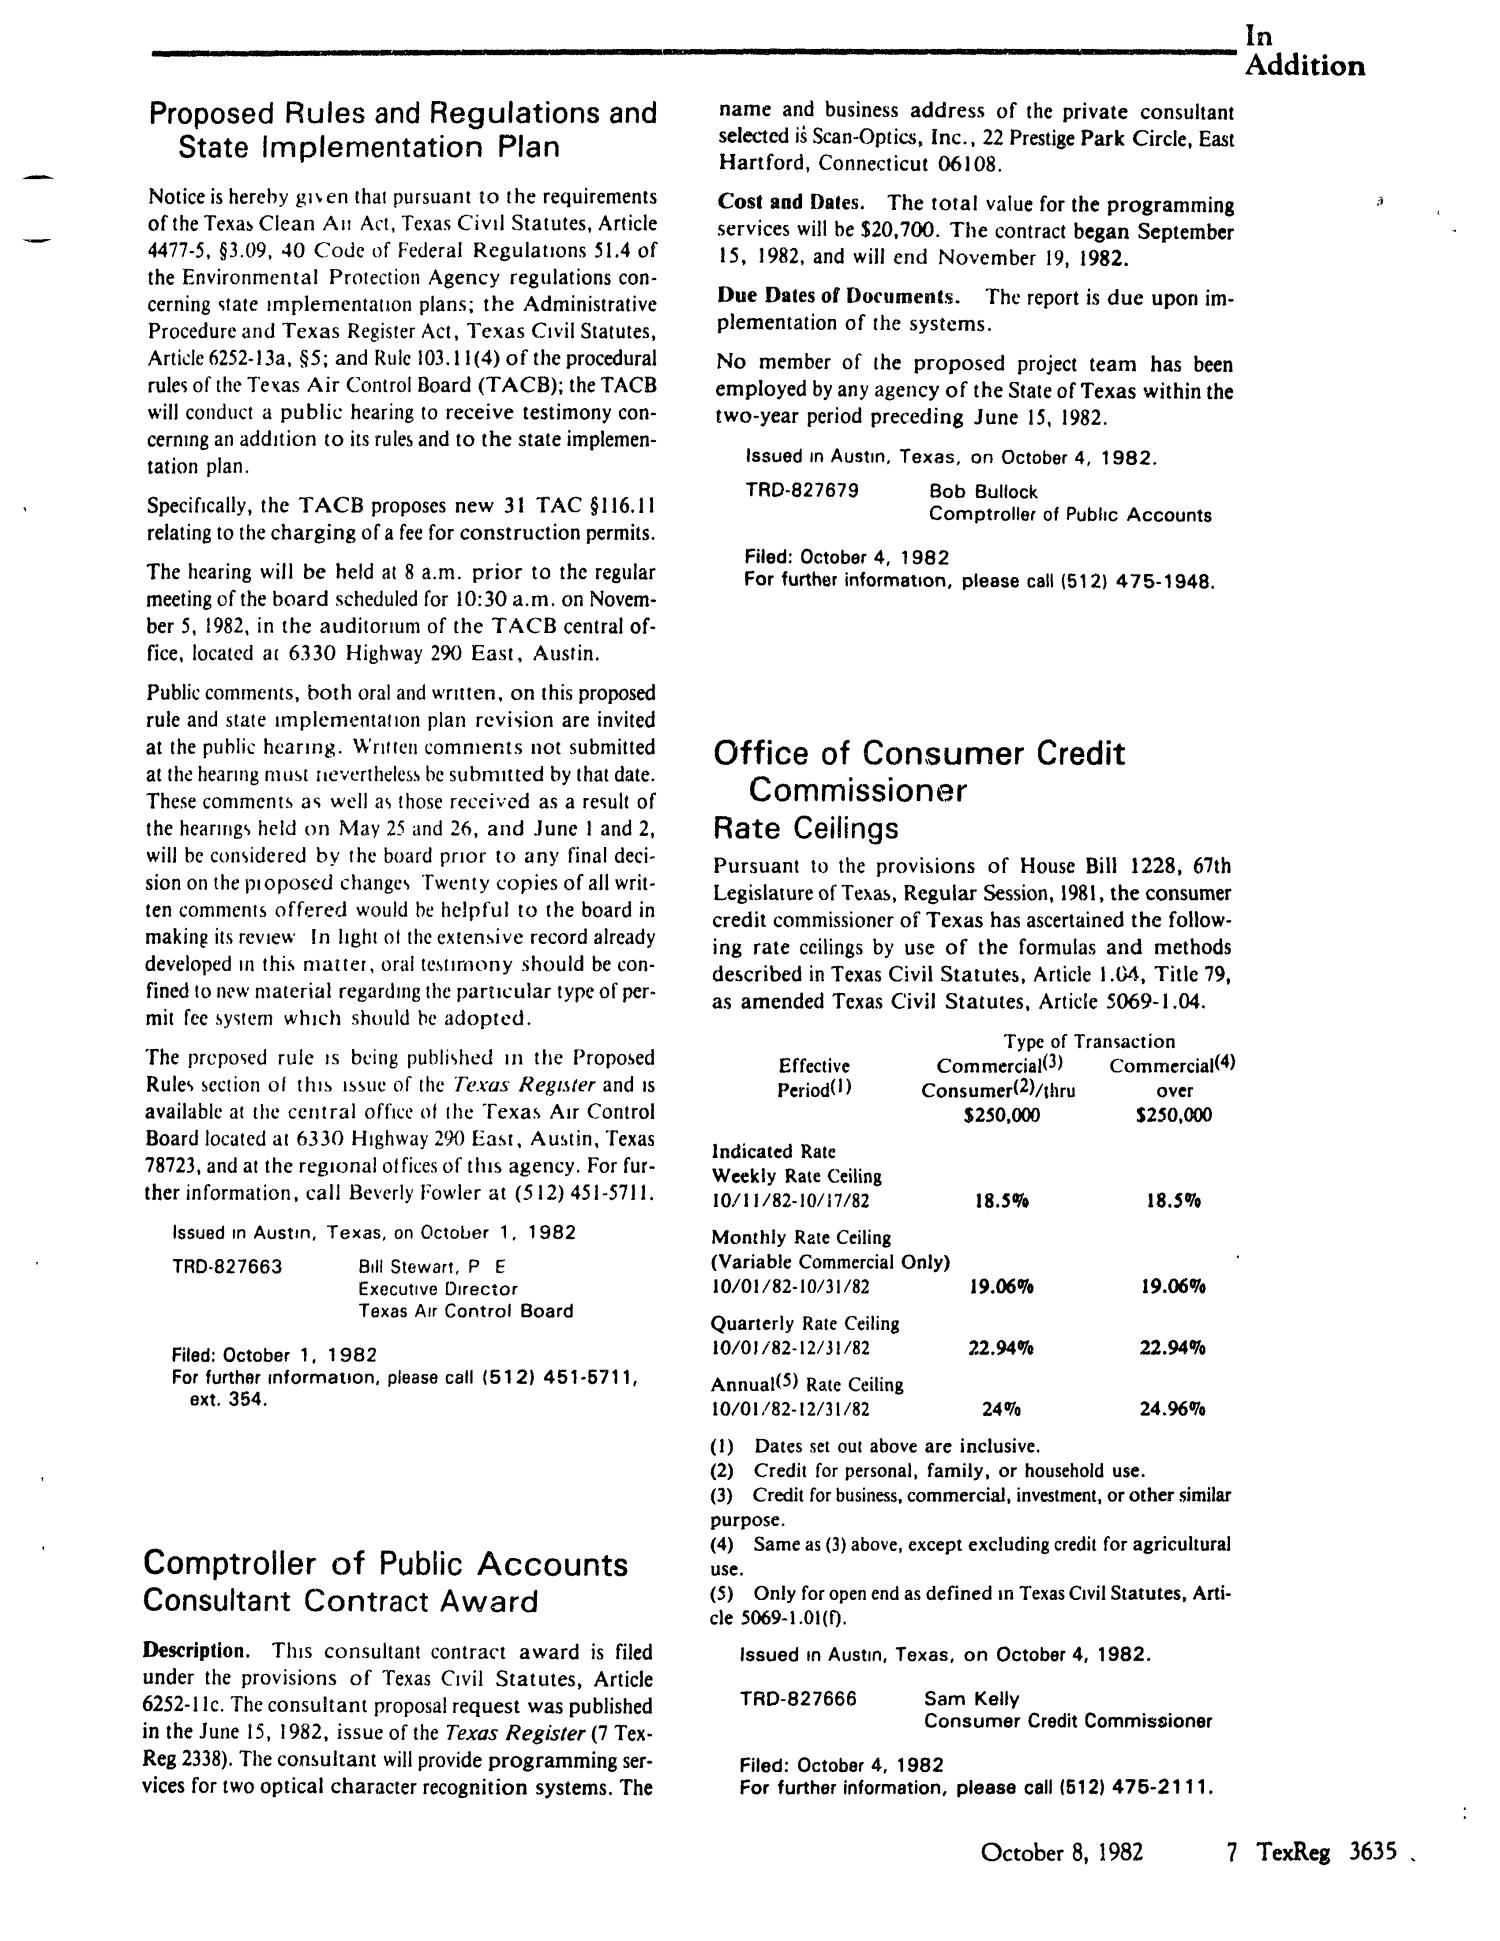 Texas Register, Volume 7, Number 76, Pages 3507-3640, October 8, 1982
                                                
                                                    3635
                                                